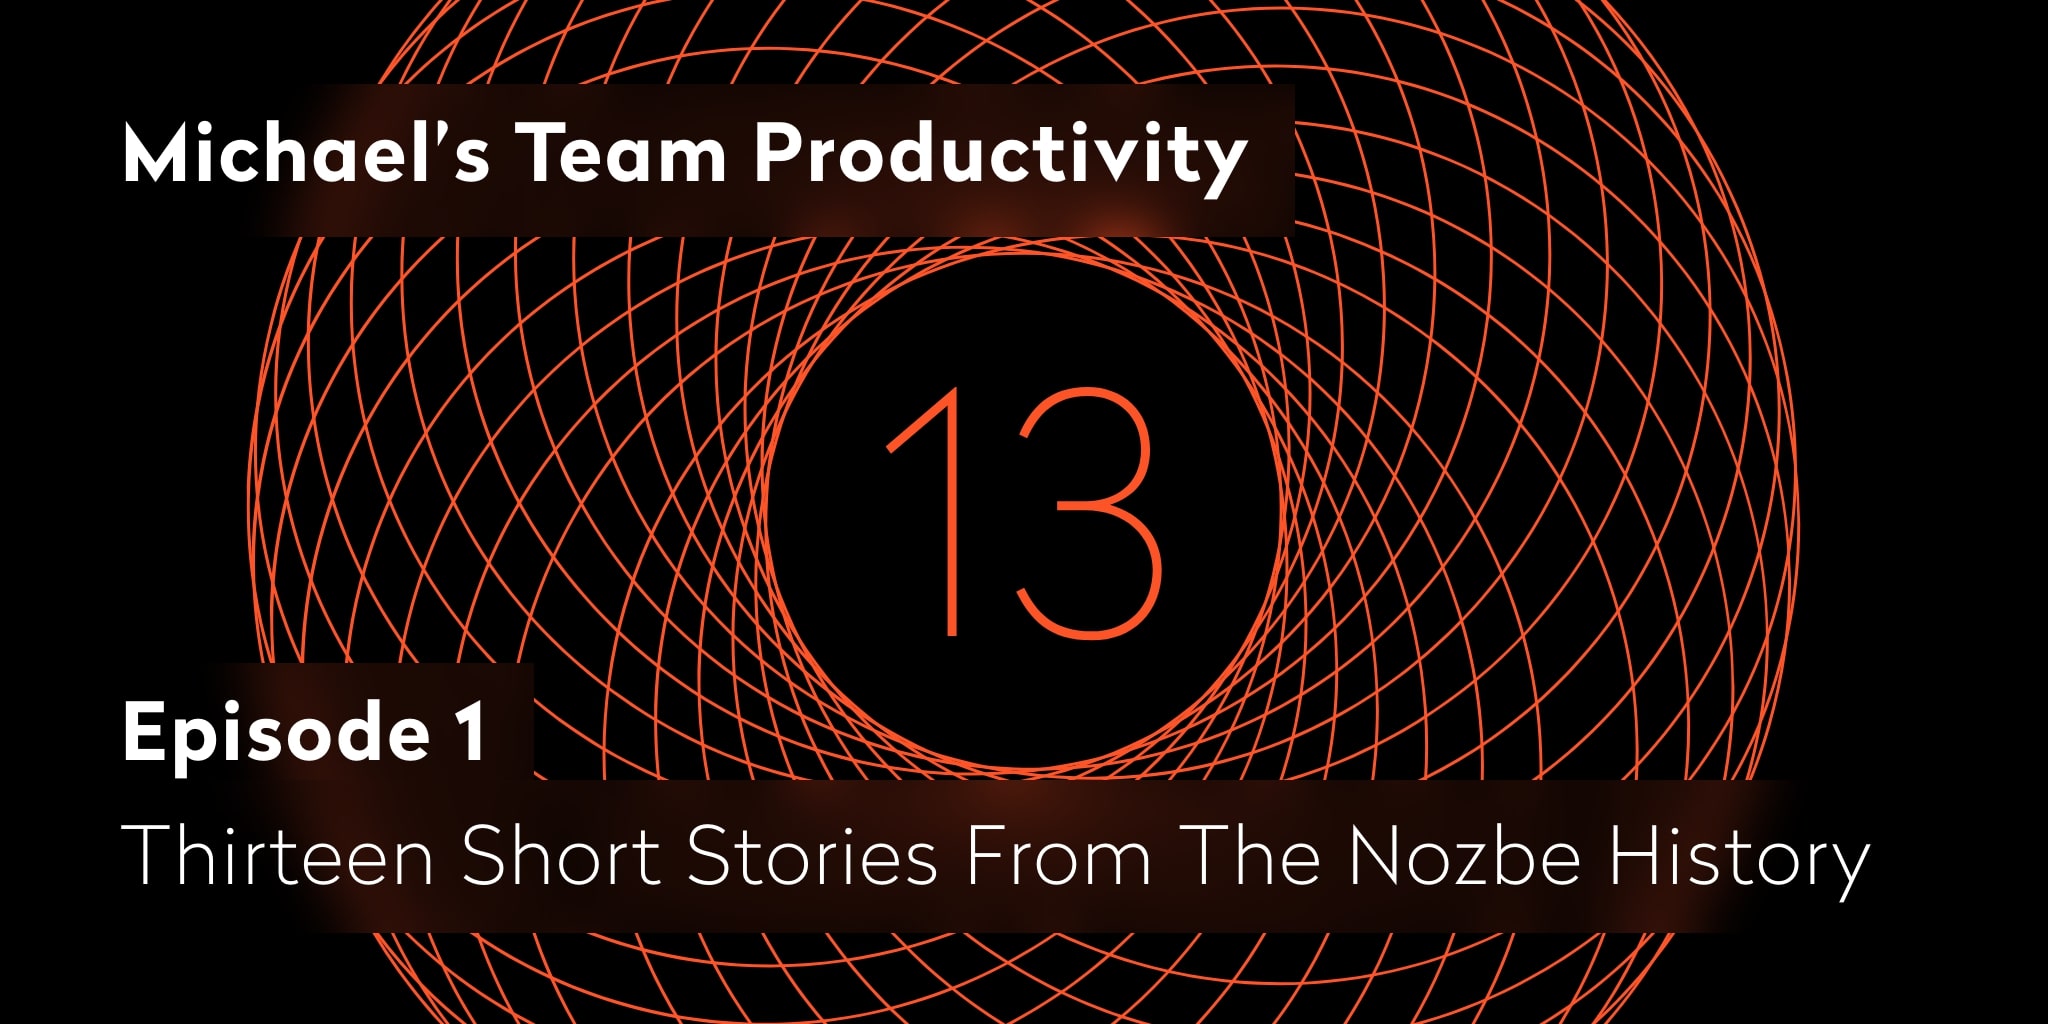 13 stories for Nozbe's 13th birthday